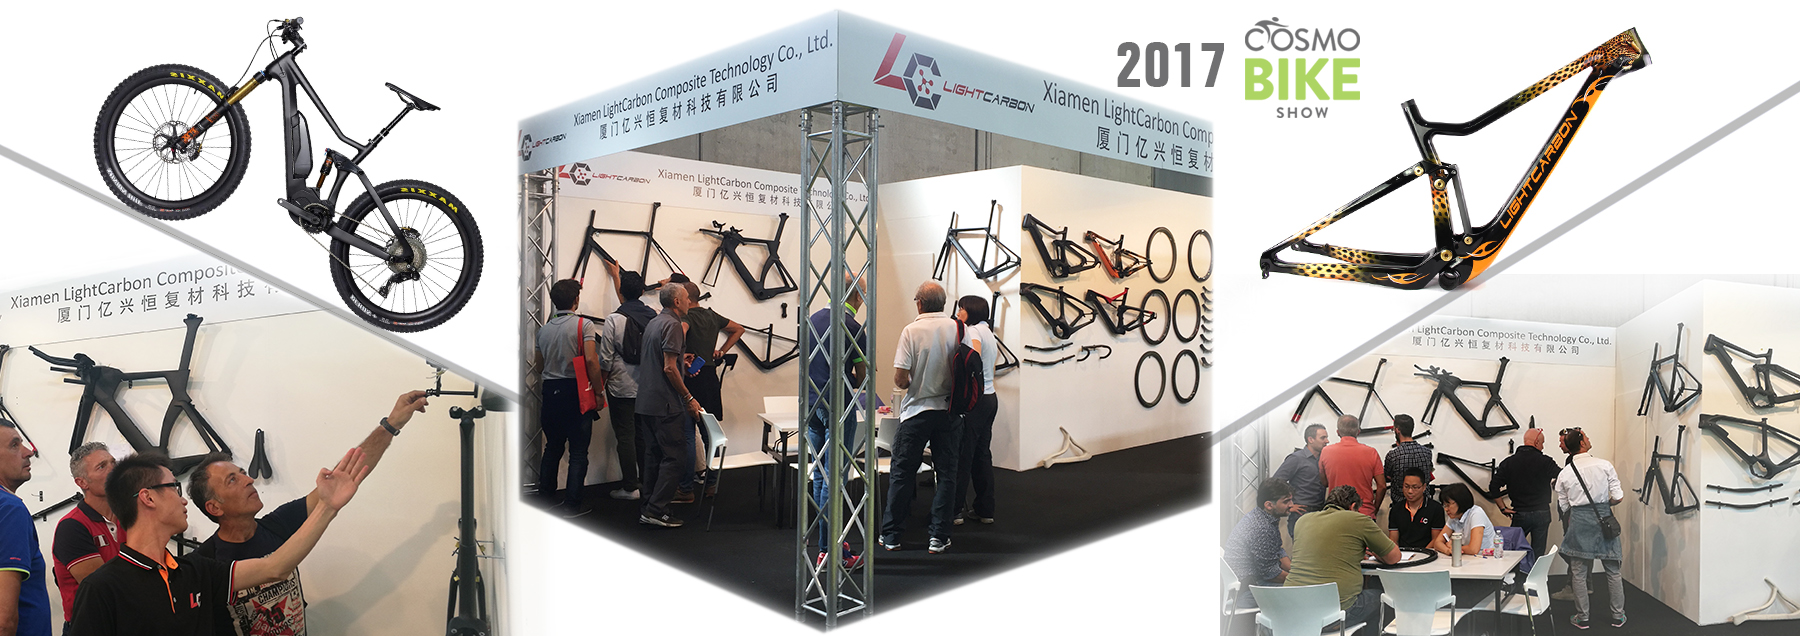 2017 Leichtcarbon-Cosmo-Bike-Show